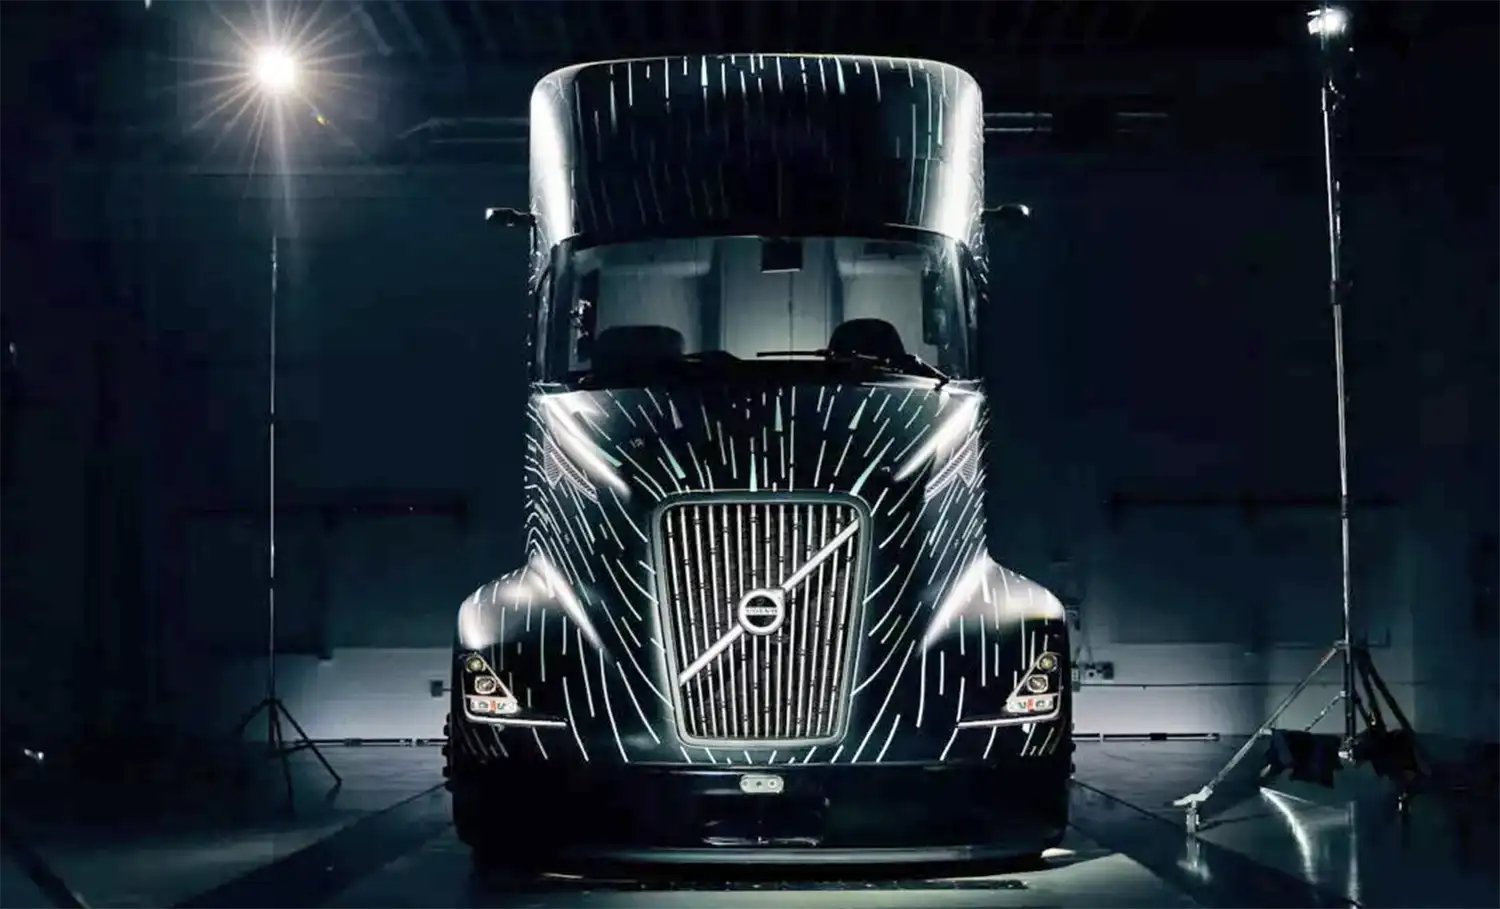 Volvo SuperTruck 2 - Exceeds Freight Efficiency Goals with Focus